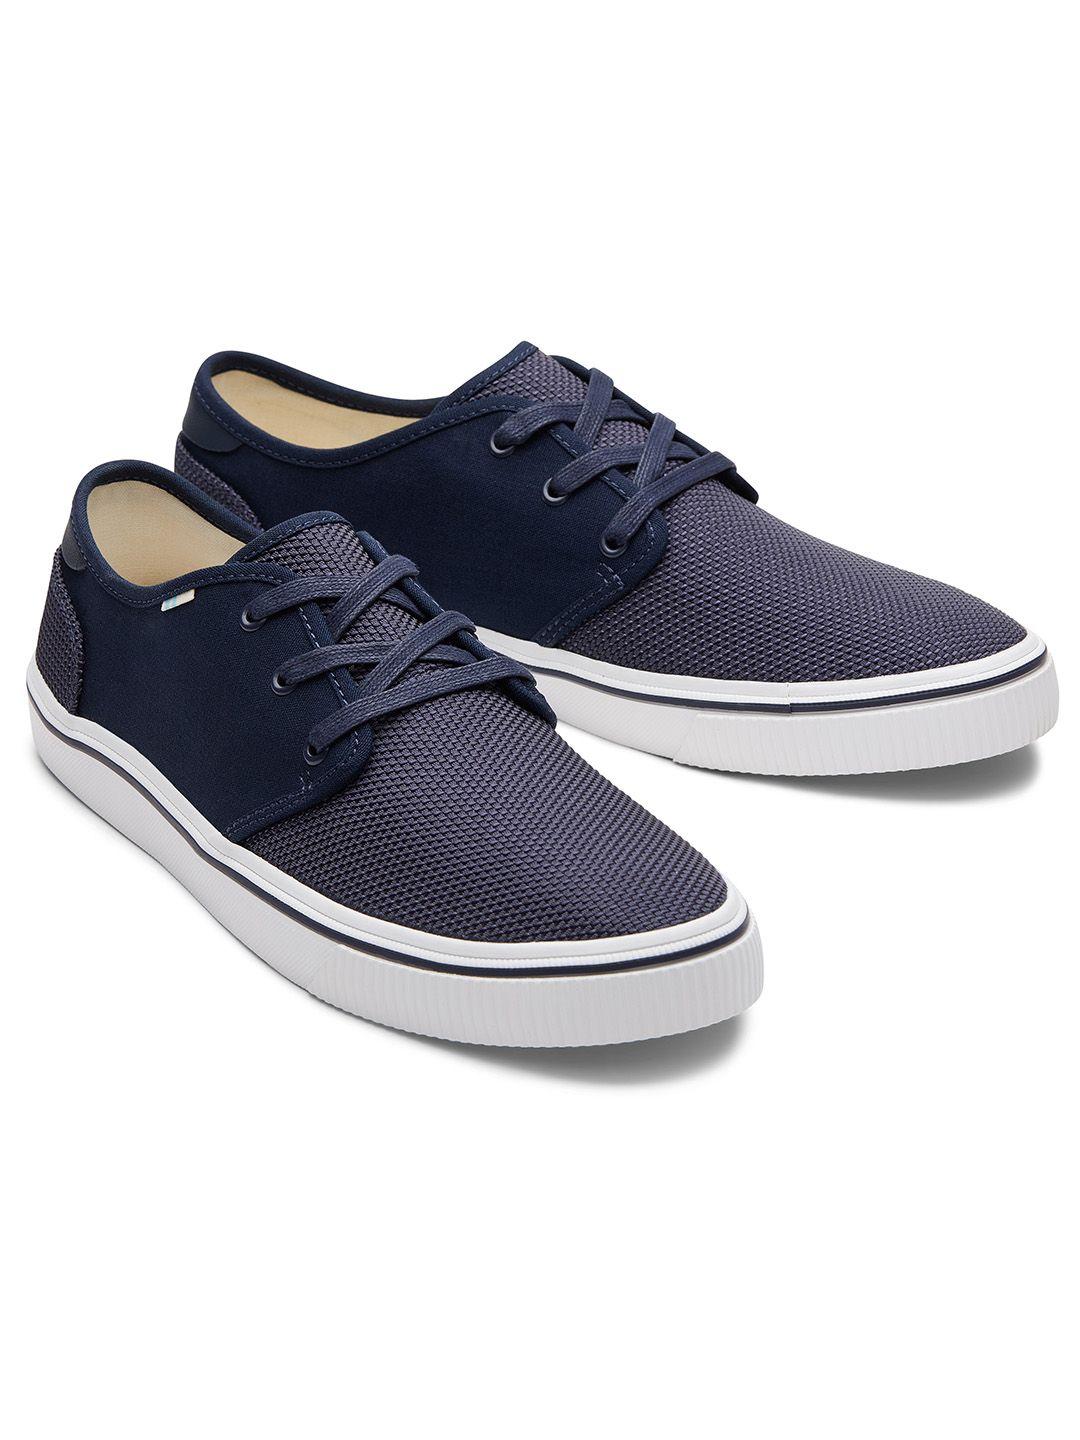 toms-men-navy-blue-carlo-sneakers